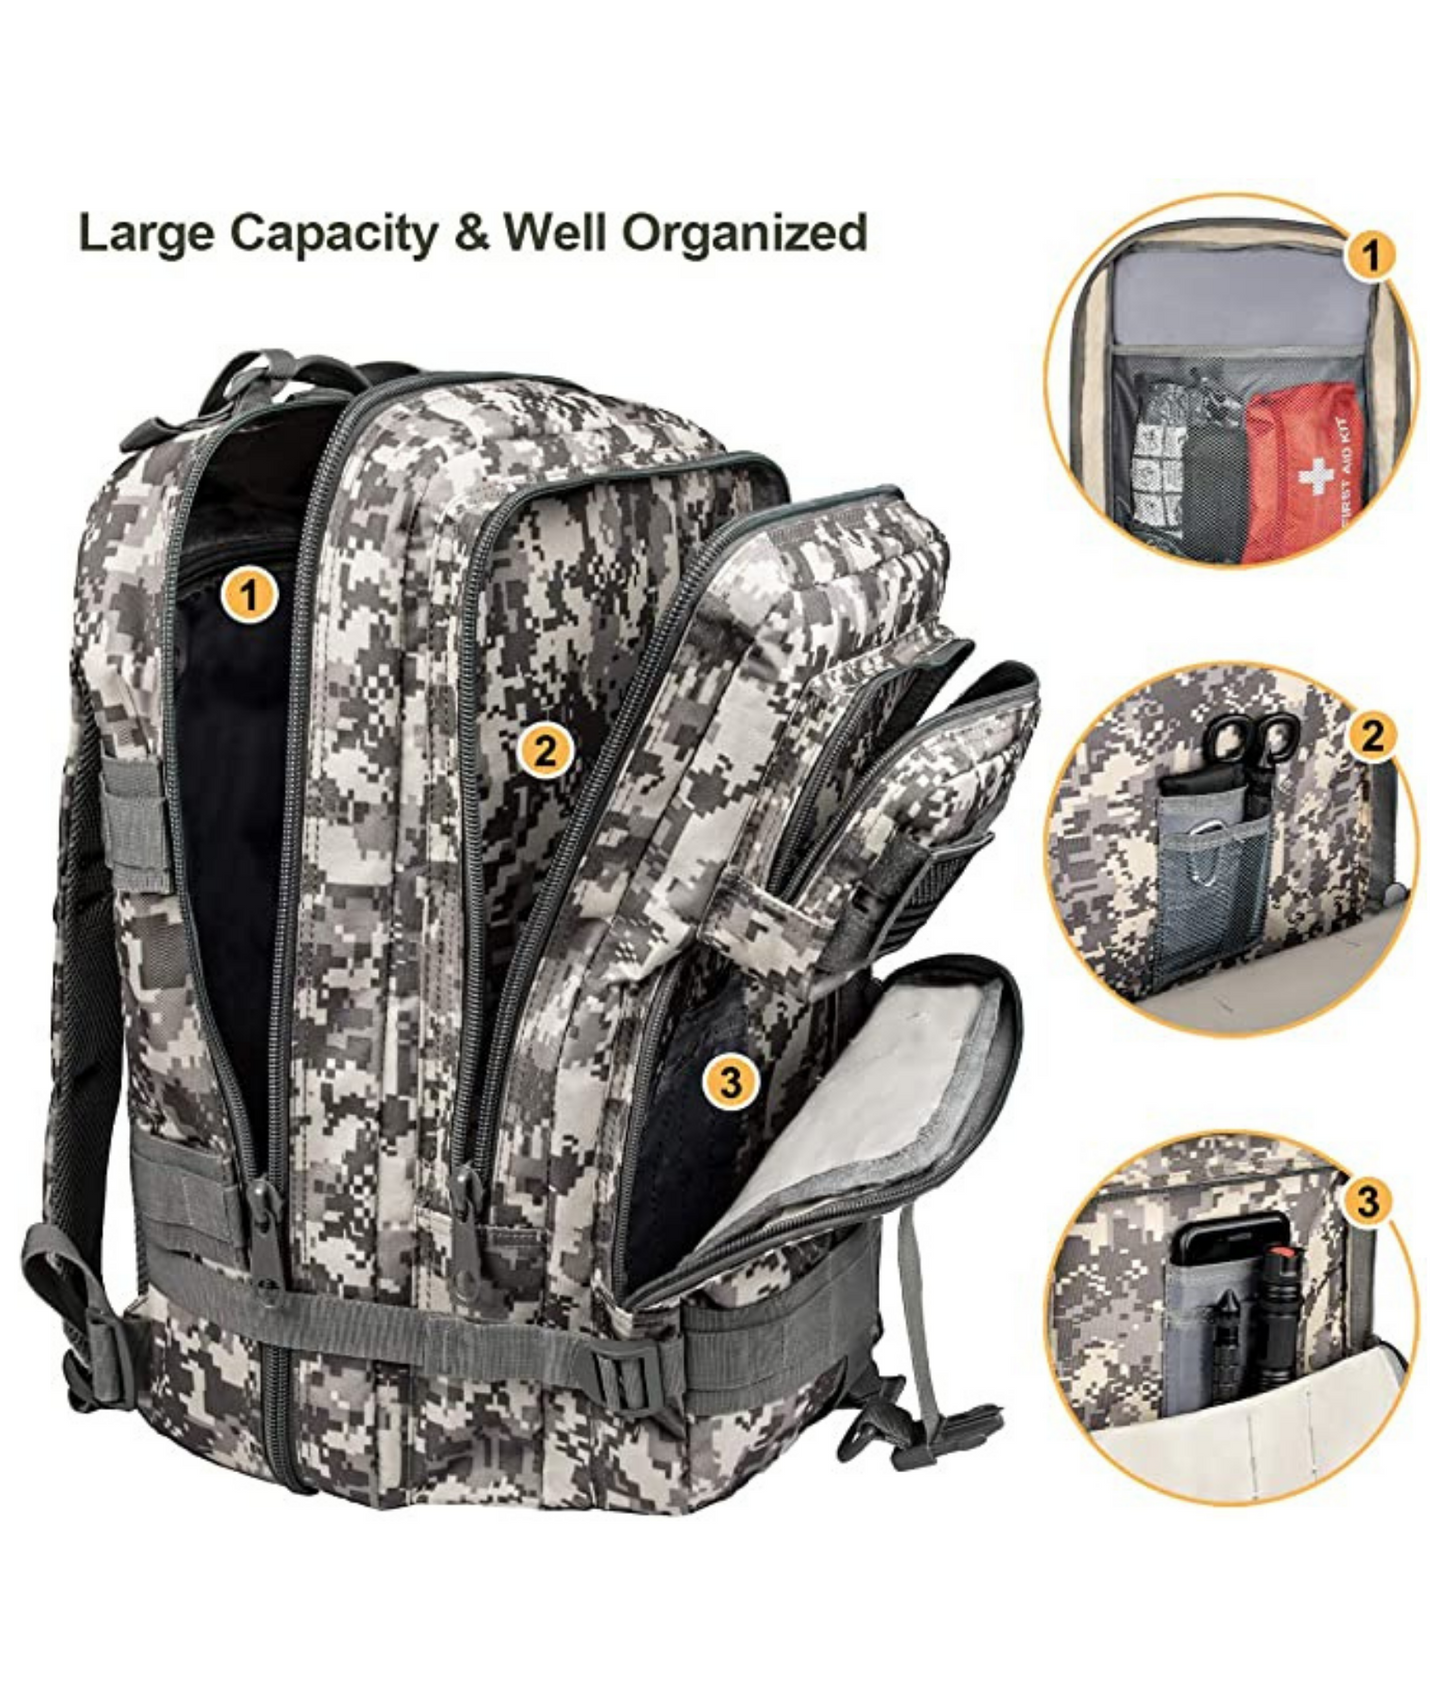 Military 3P Tactical 25L Backpack | Army Assault Pack | Molle Bag Rucksack | Range Bag